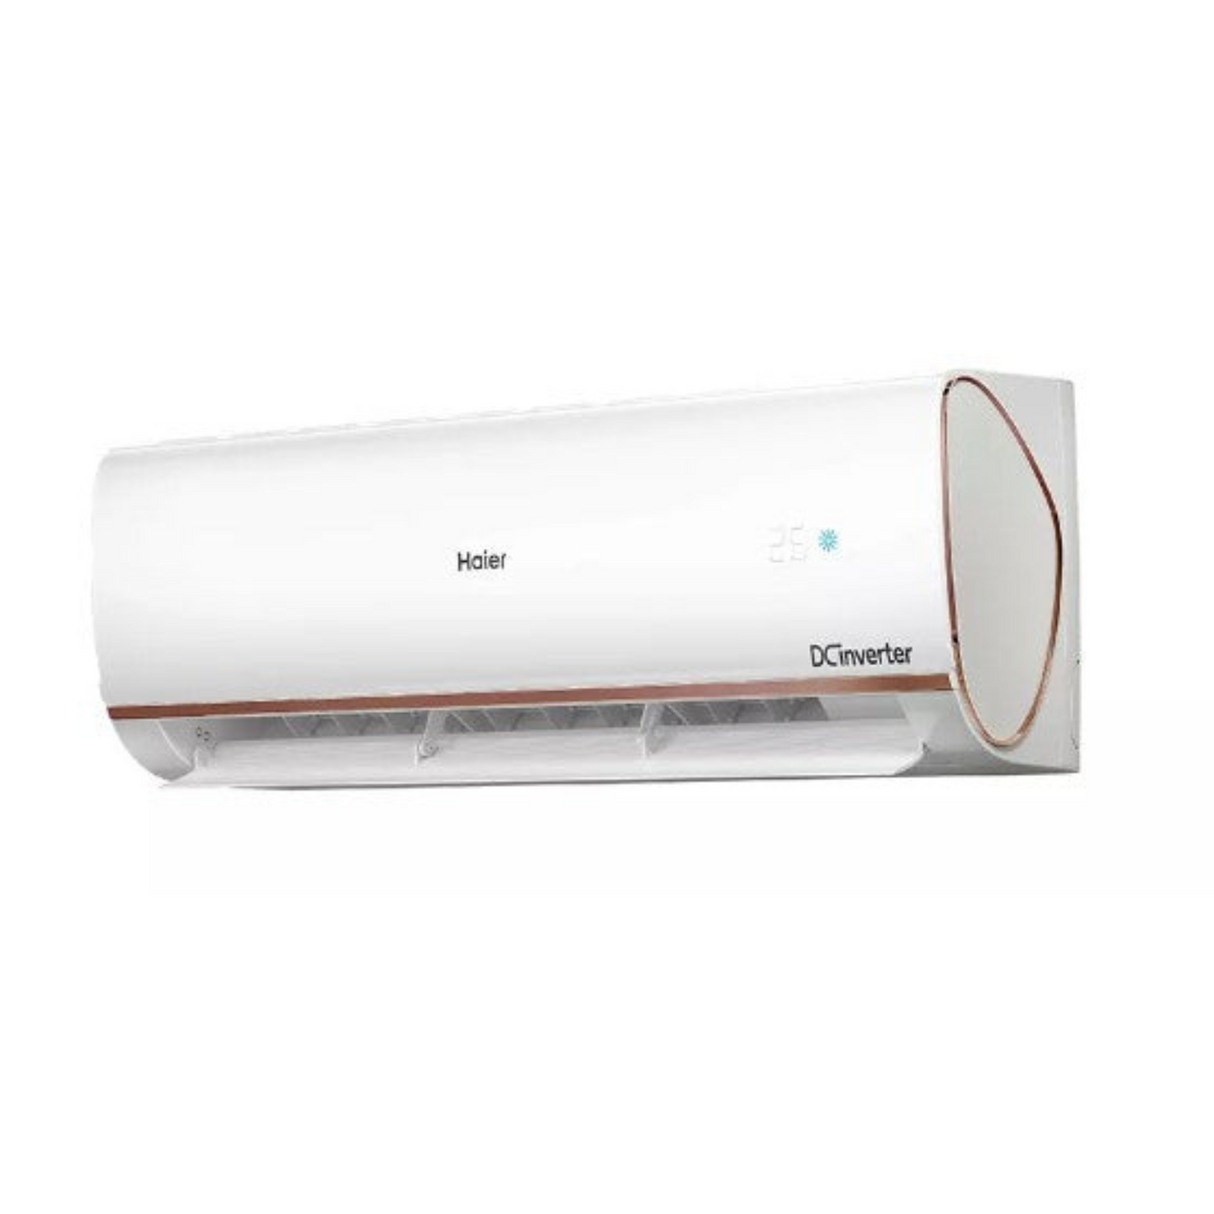 Haier 1.6 Ton 4-Star Inverter AC - Superior Cooling